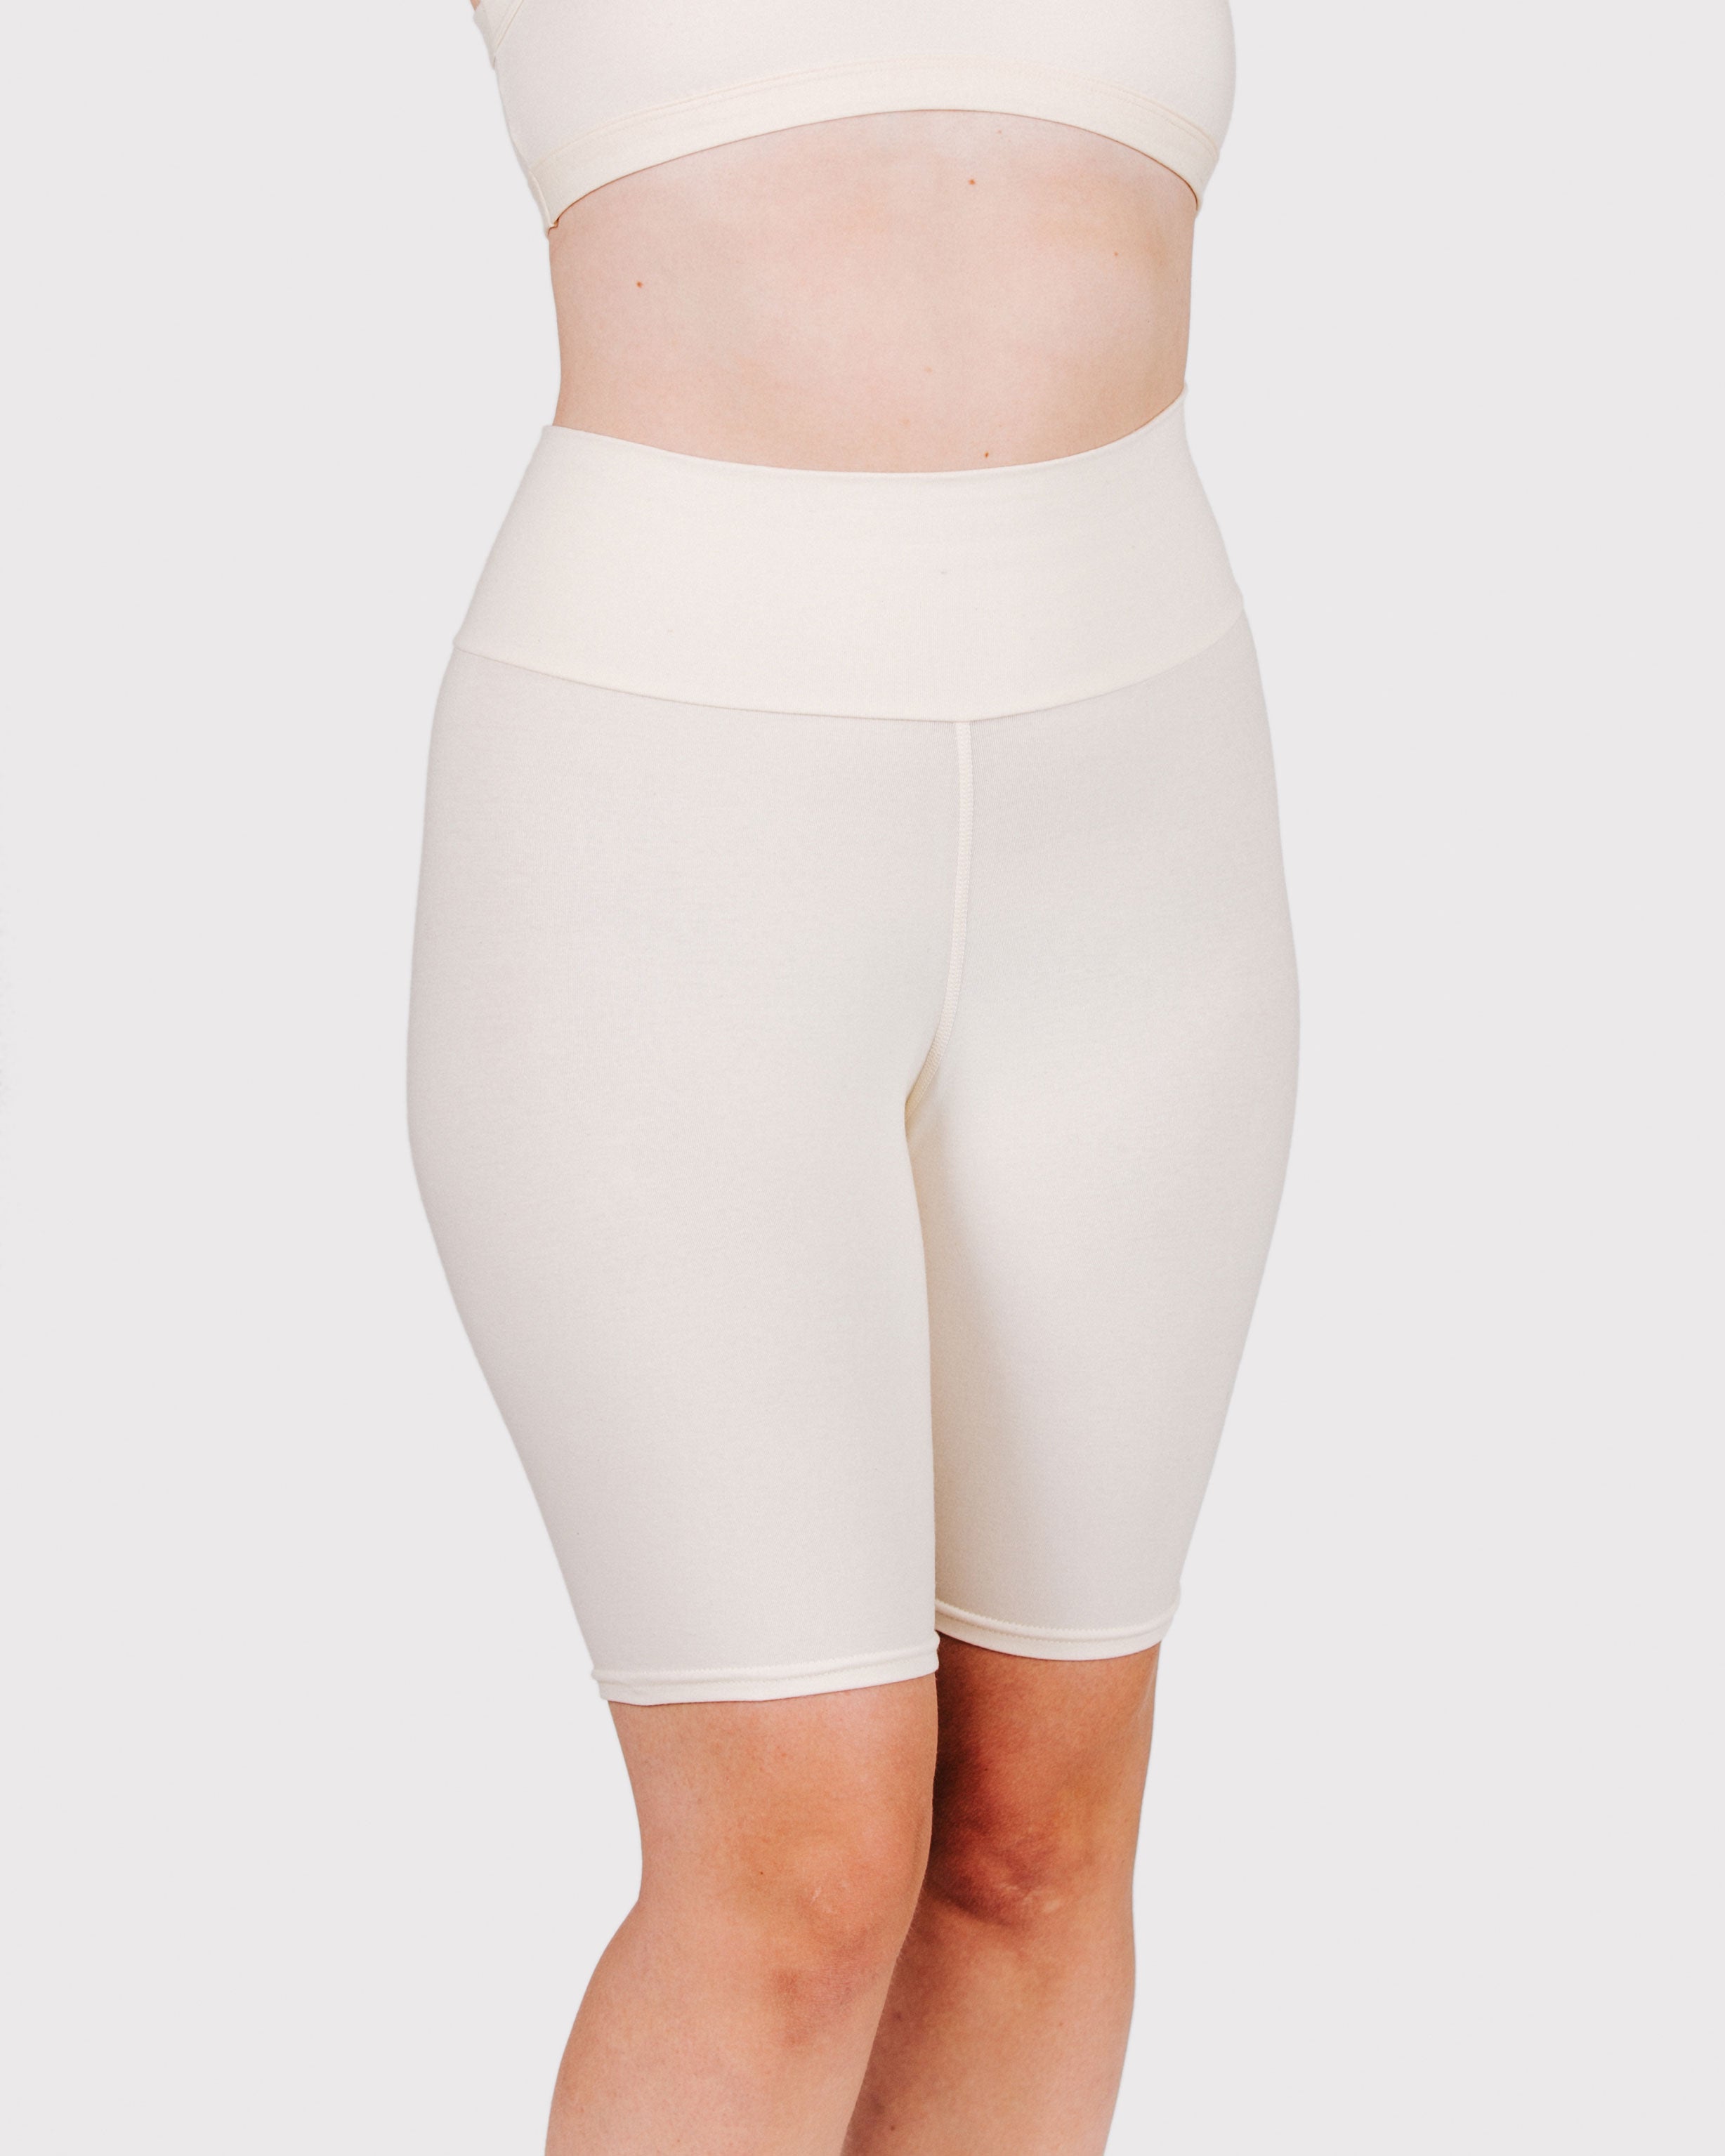 SALE: Women's Bike Shorts XL